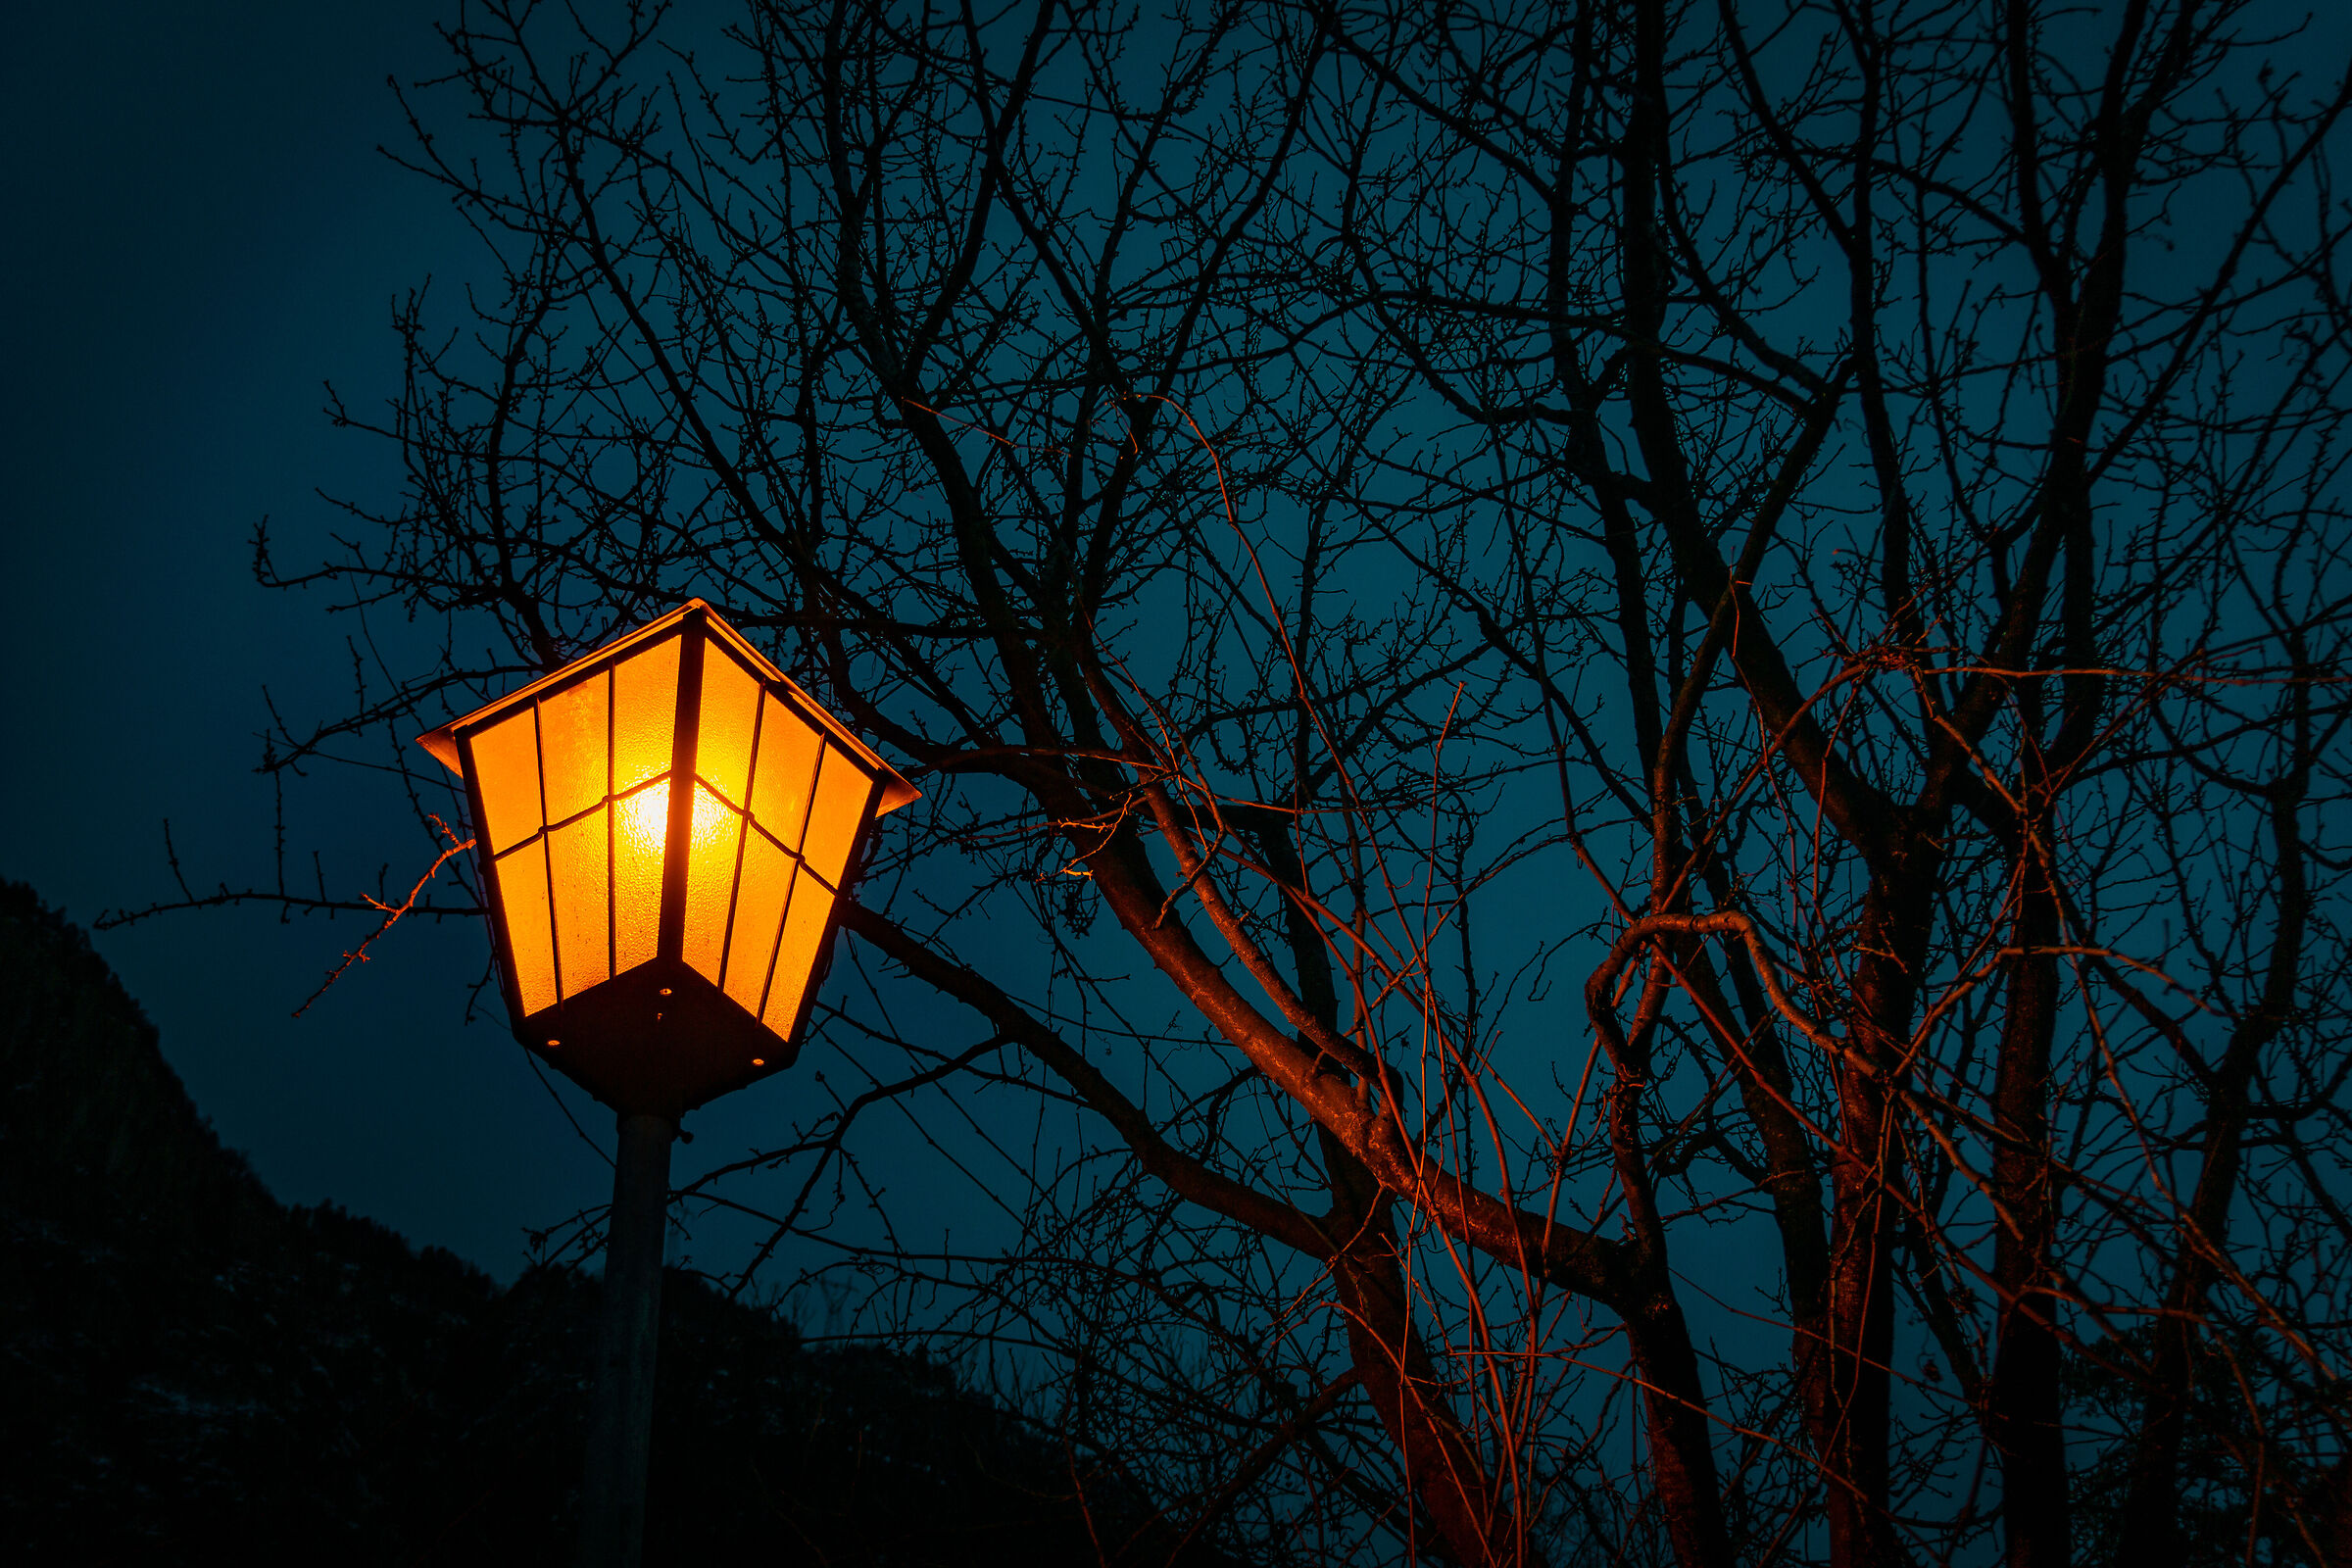 Street lamp at night...